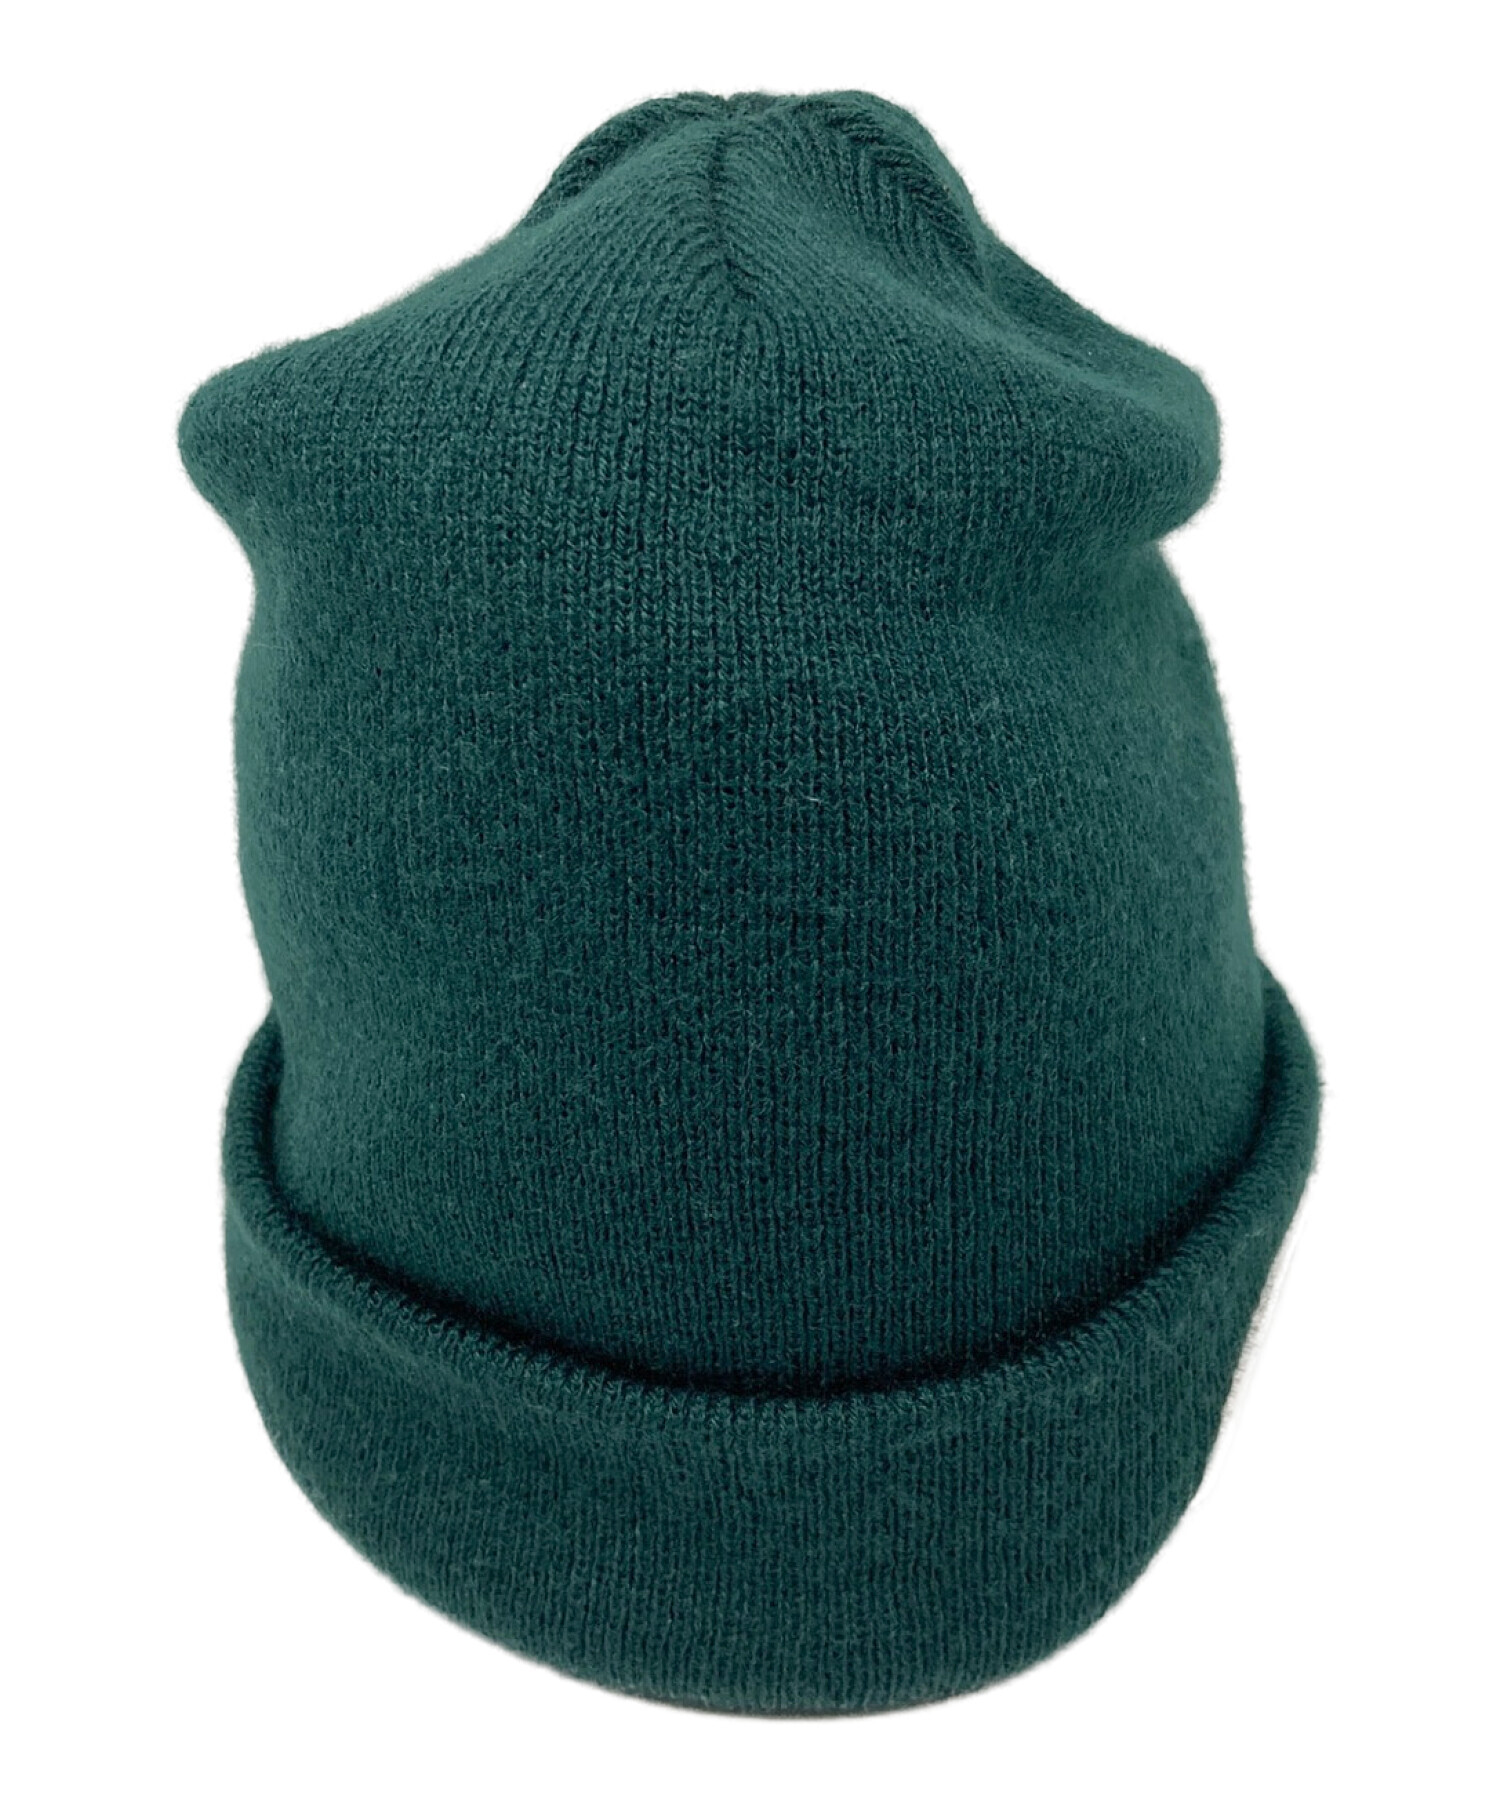 BlackEyePatch (ブラックアイパッチ) ニット帽 グリーン